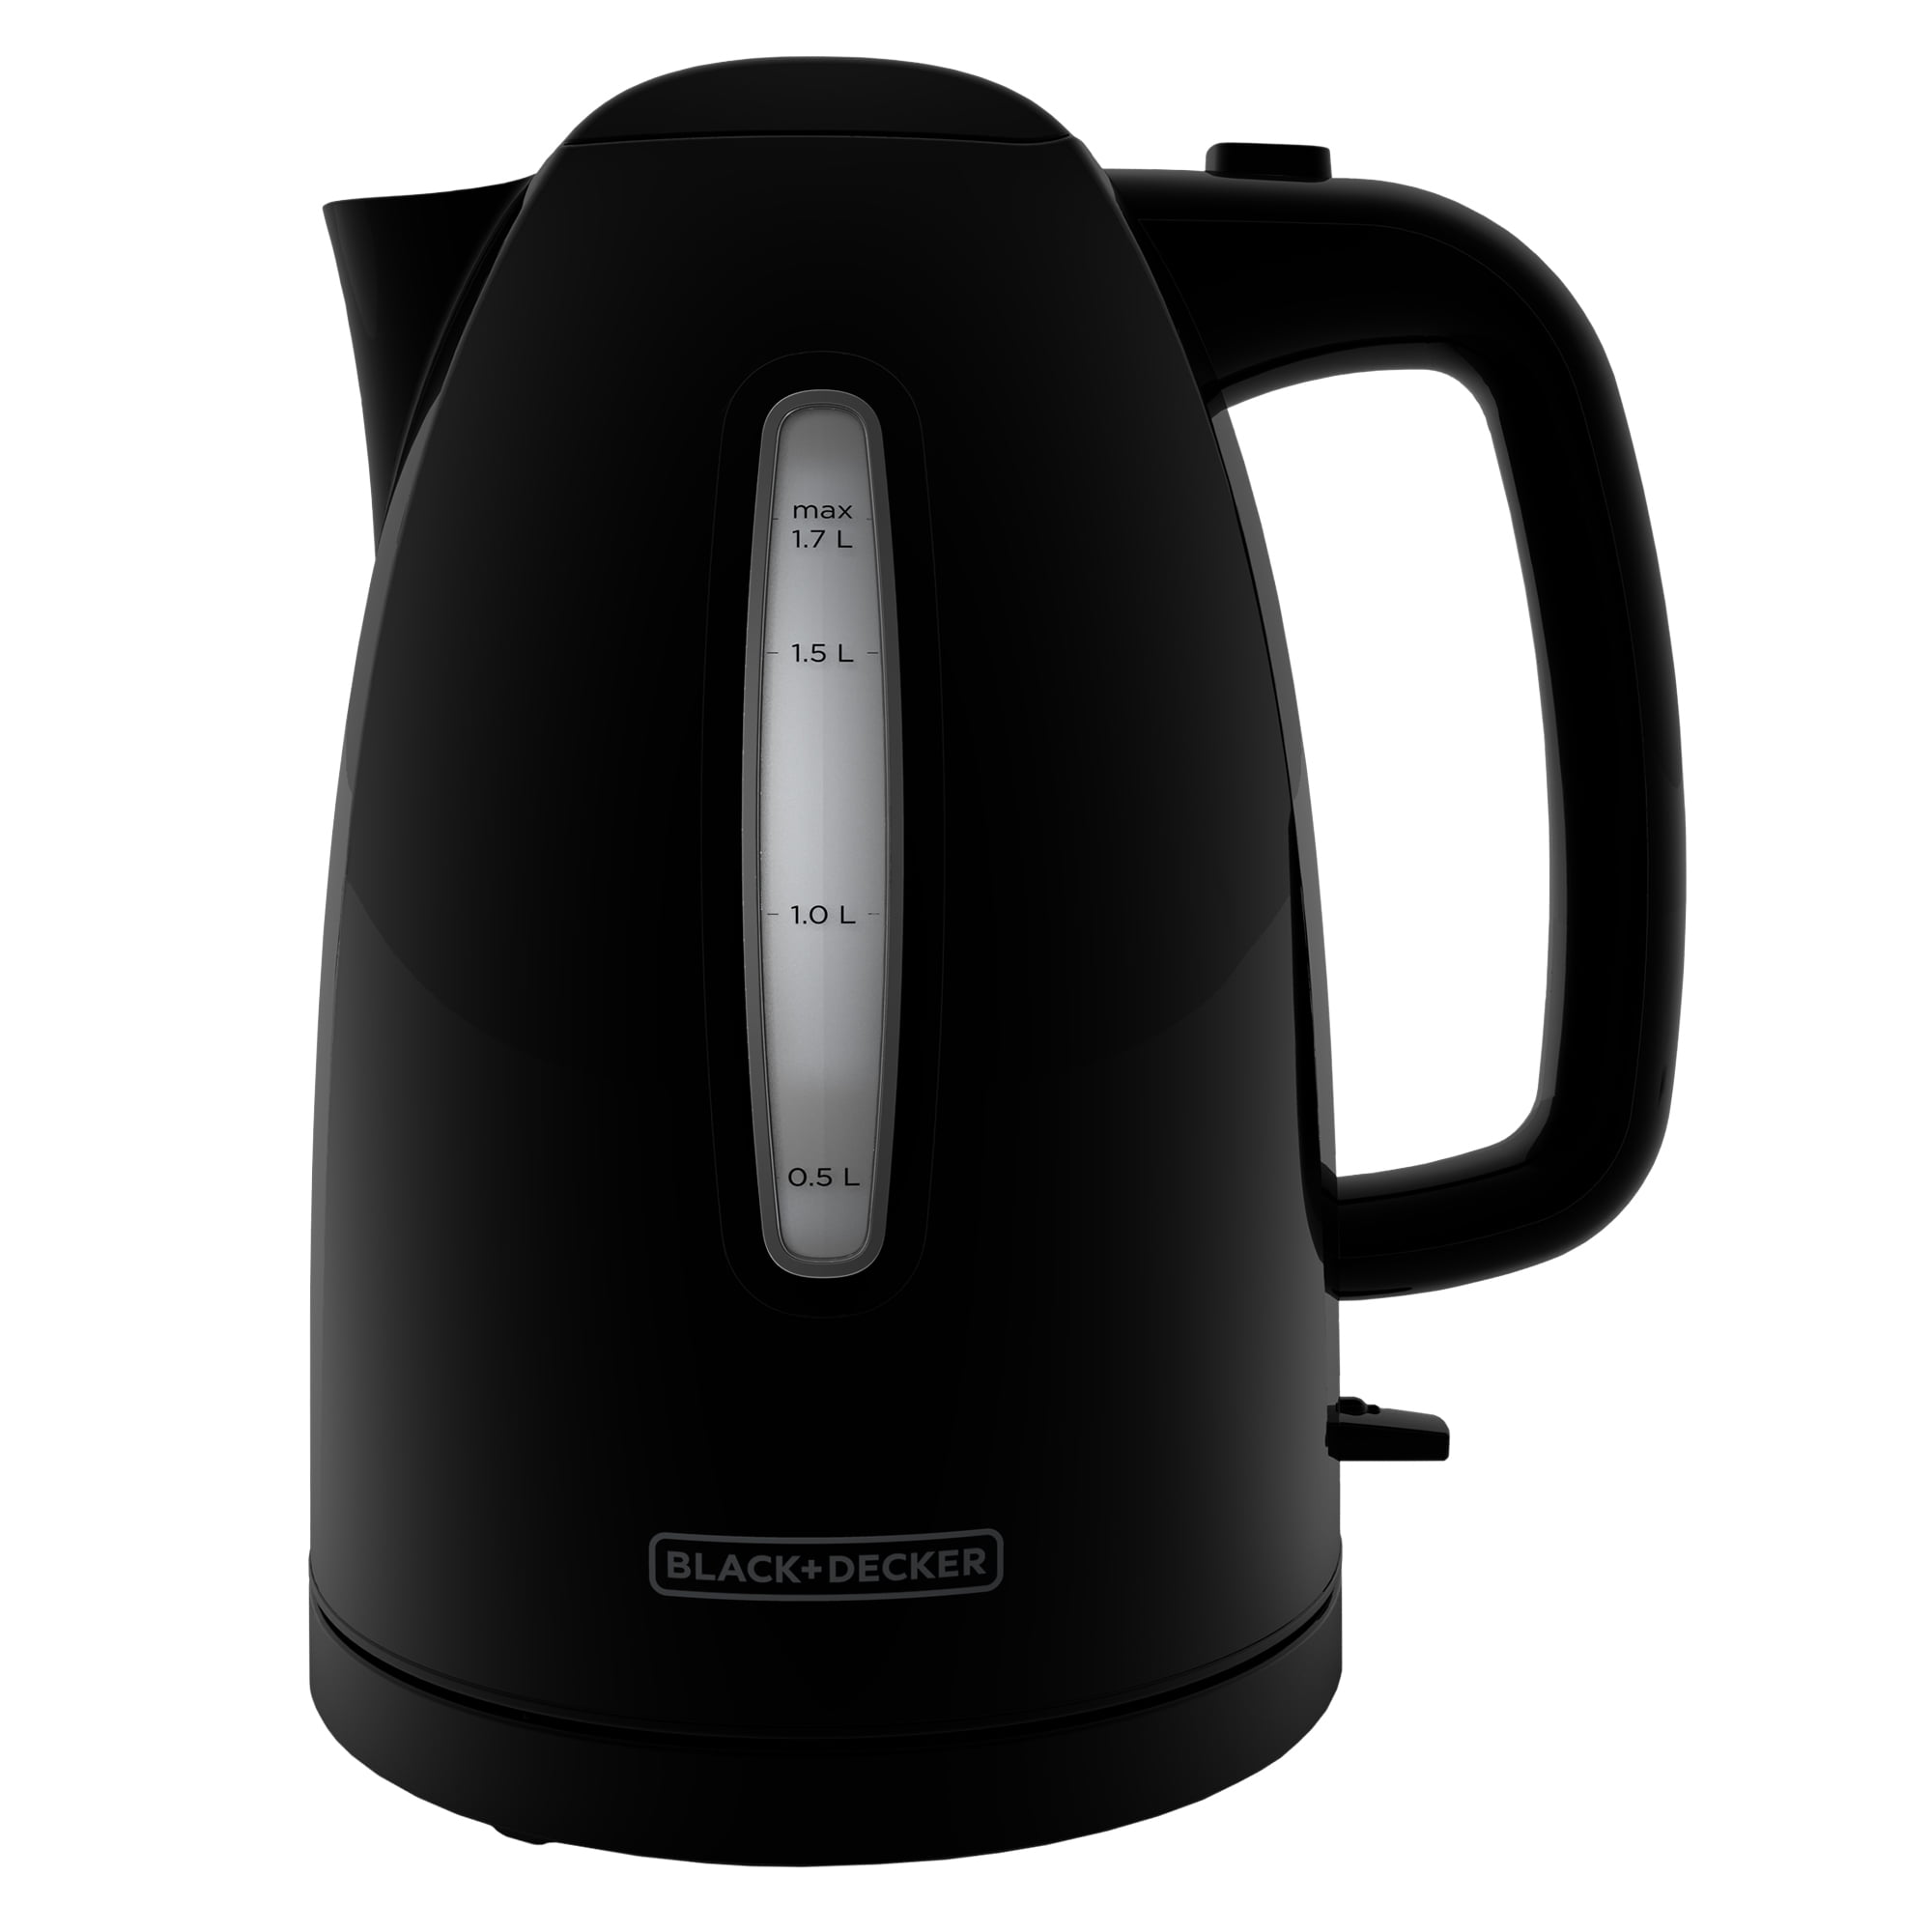 Black n decker 1.7 rapid boil electric cordless kettle